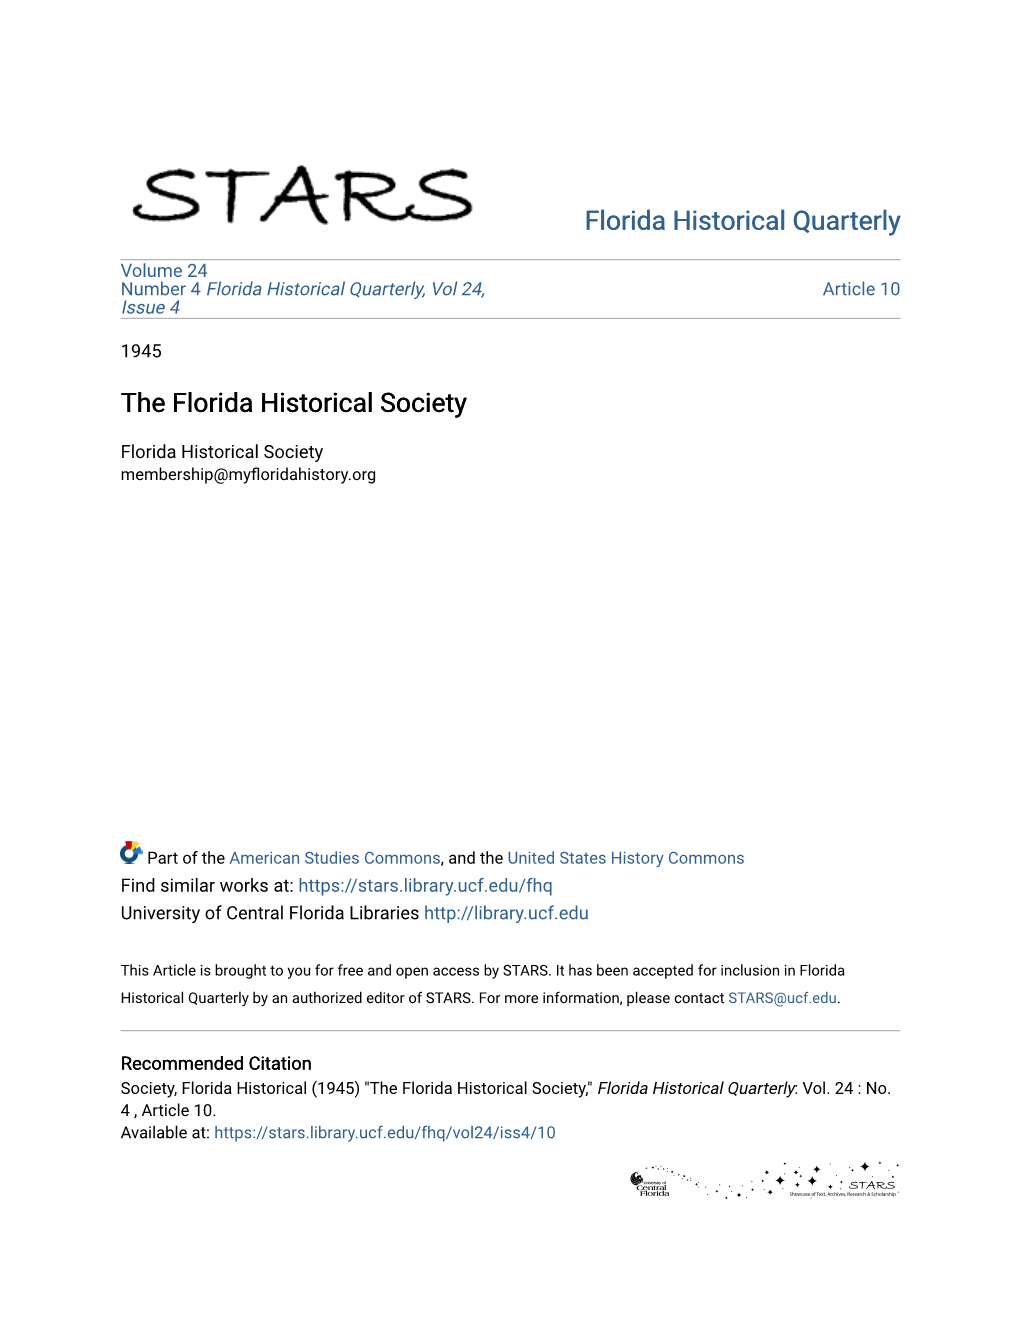 The Florida Historical Society